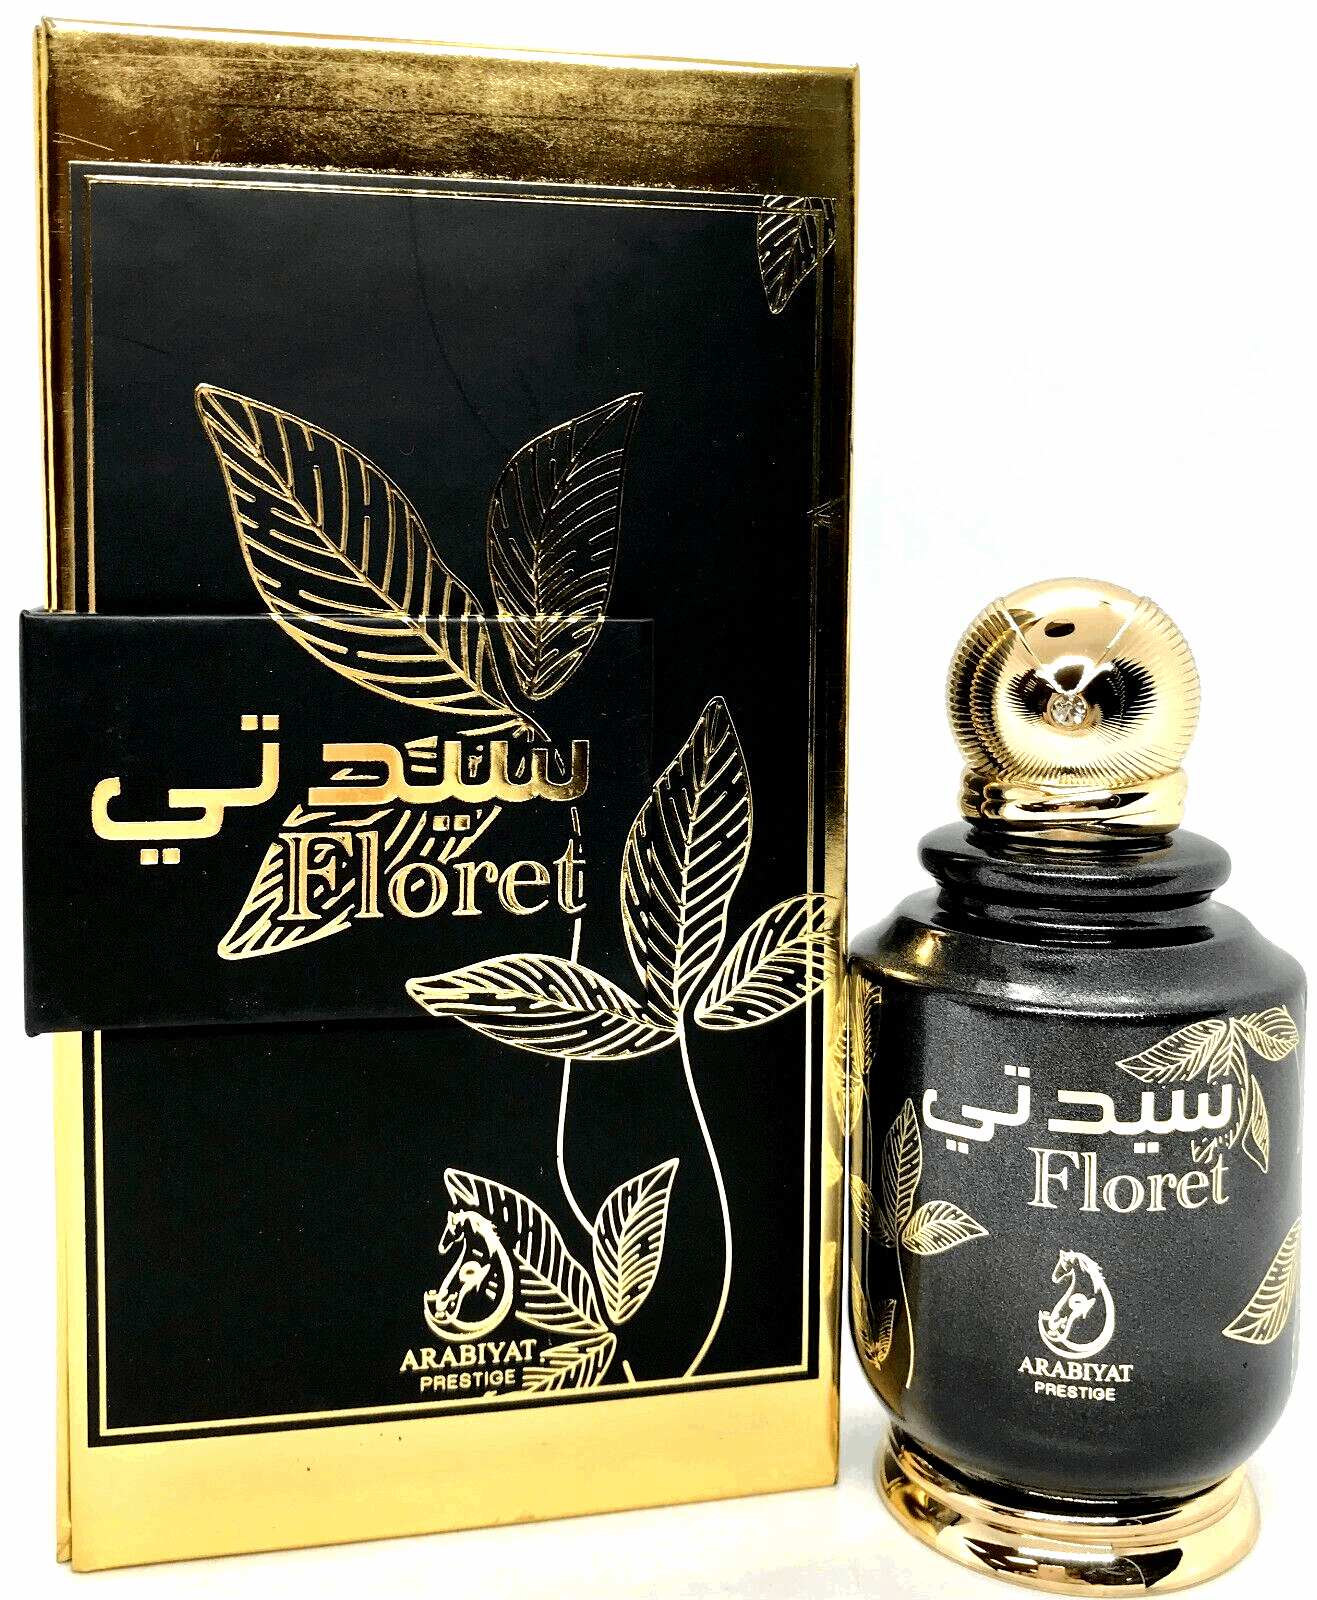 Sayidati Floret 100ml - Eau De Parfum Arabiyat Prestige